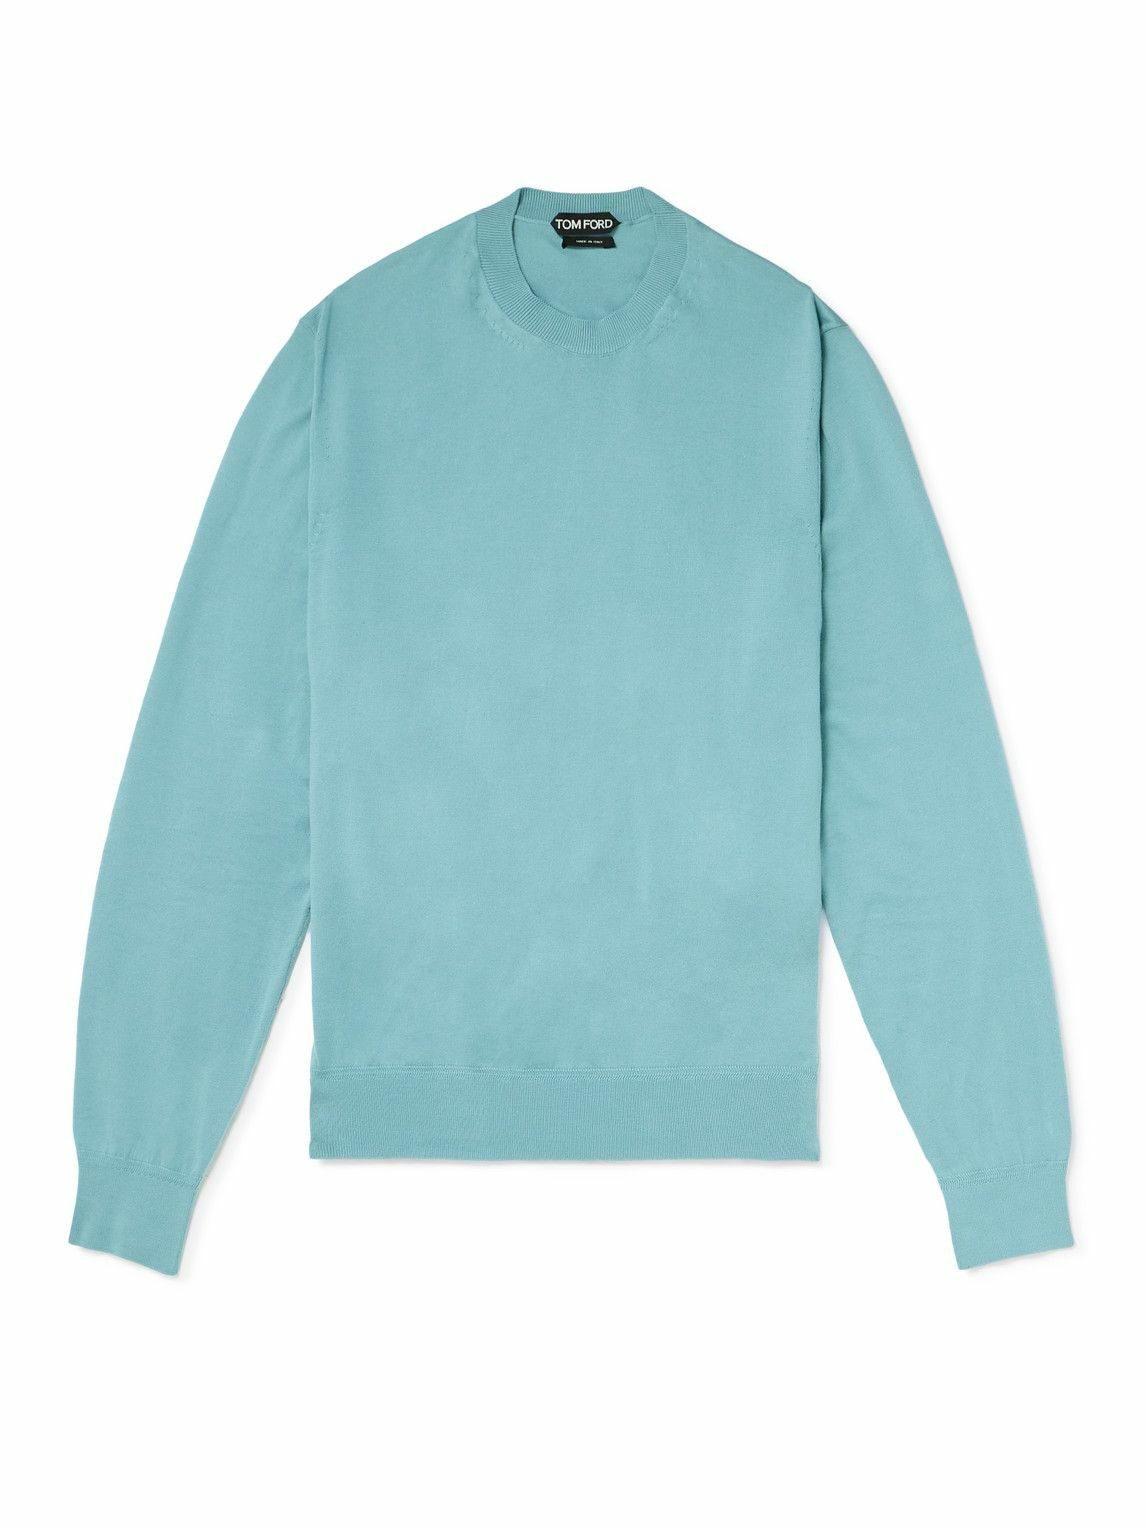 TOM FORD - Sea Island Cotton Sweater - Blue TOM FORD